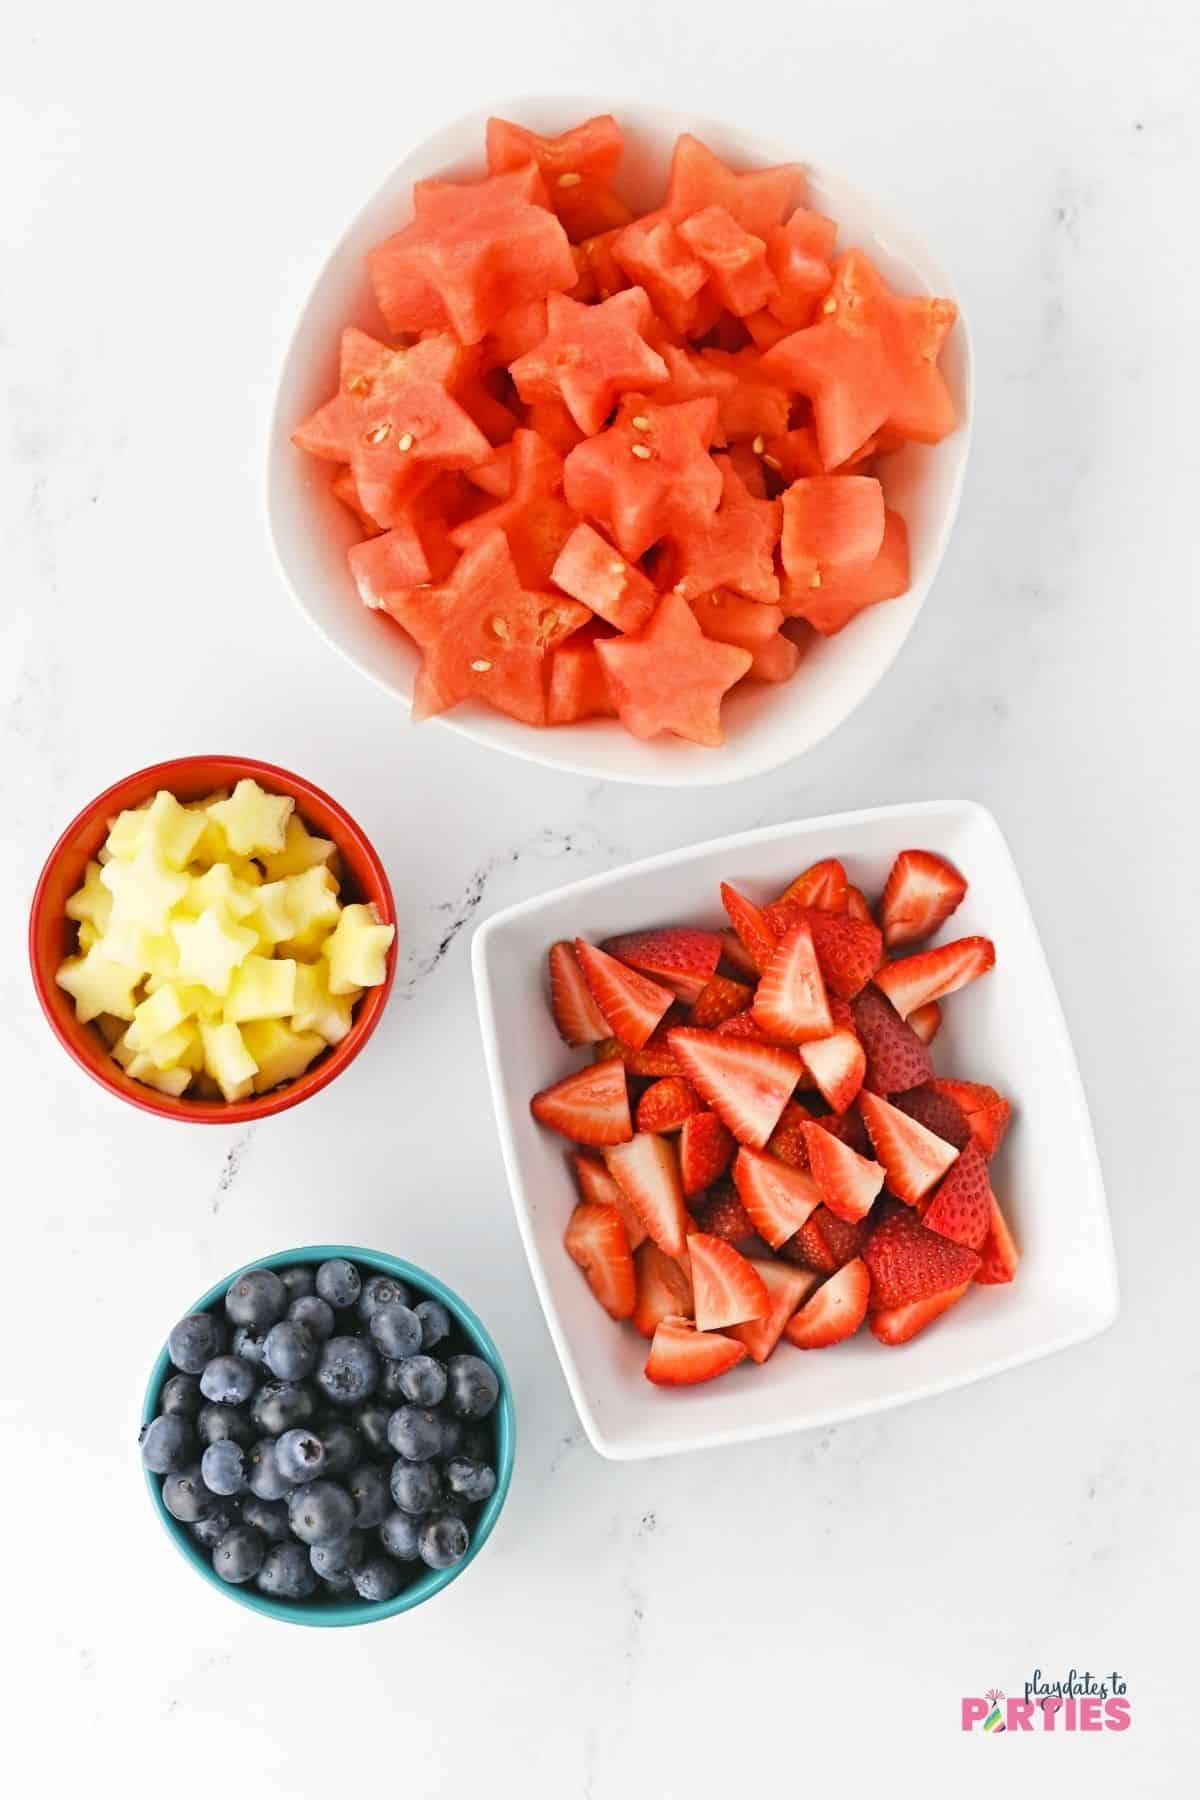 Patriotic ingredients include watermelon, apple stars, blueberries, and sliced strawberries.